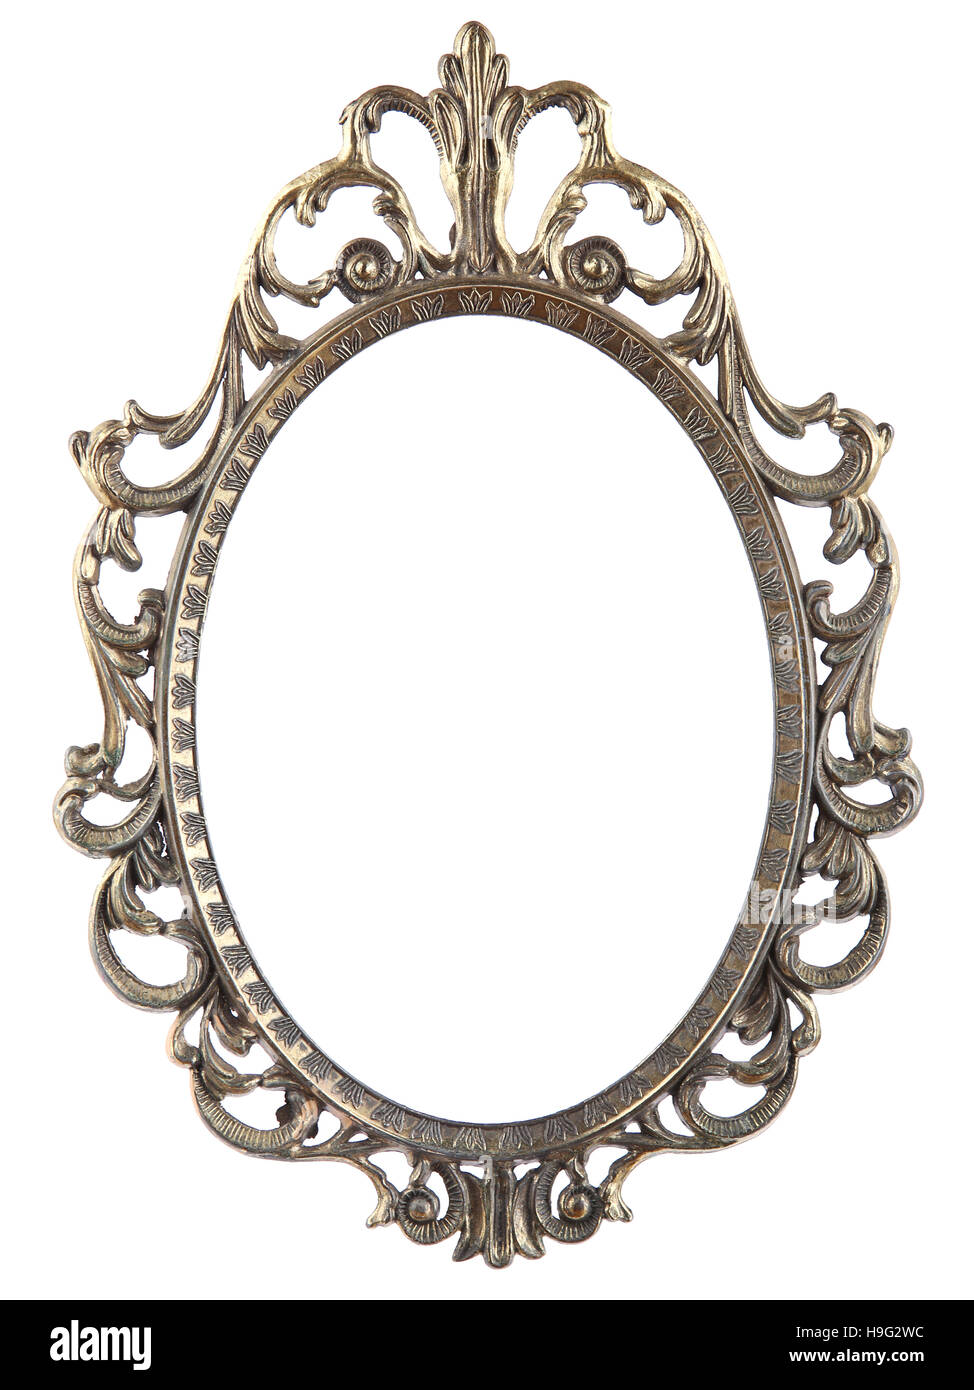 Metallo Vintage specchio ovale frame isolati su sfondo bianco Foto stock -  Alamy